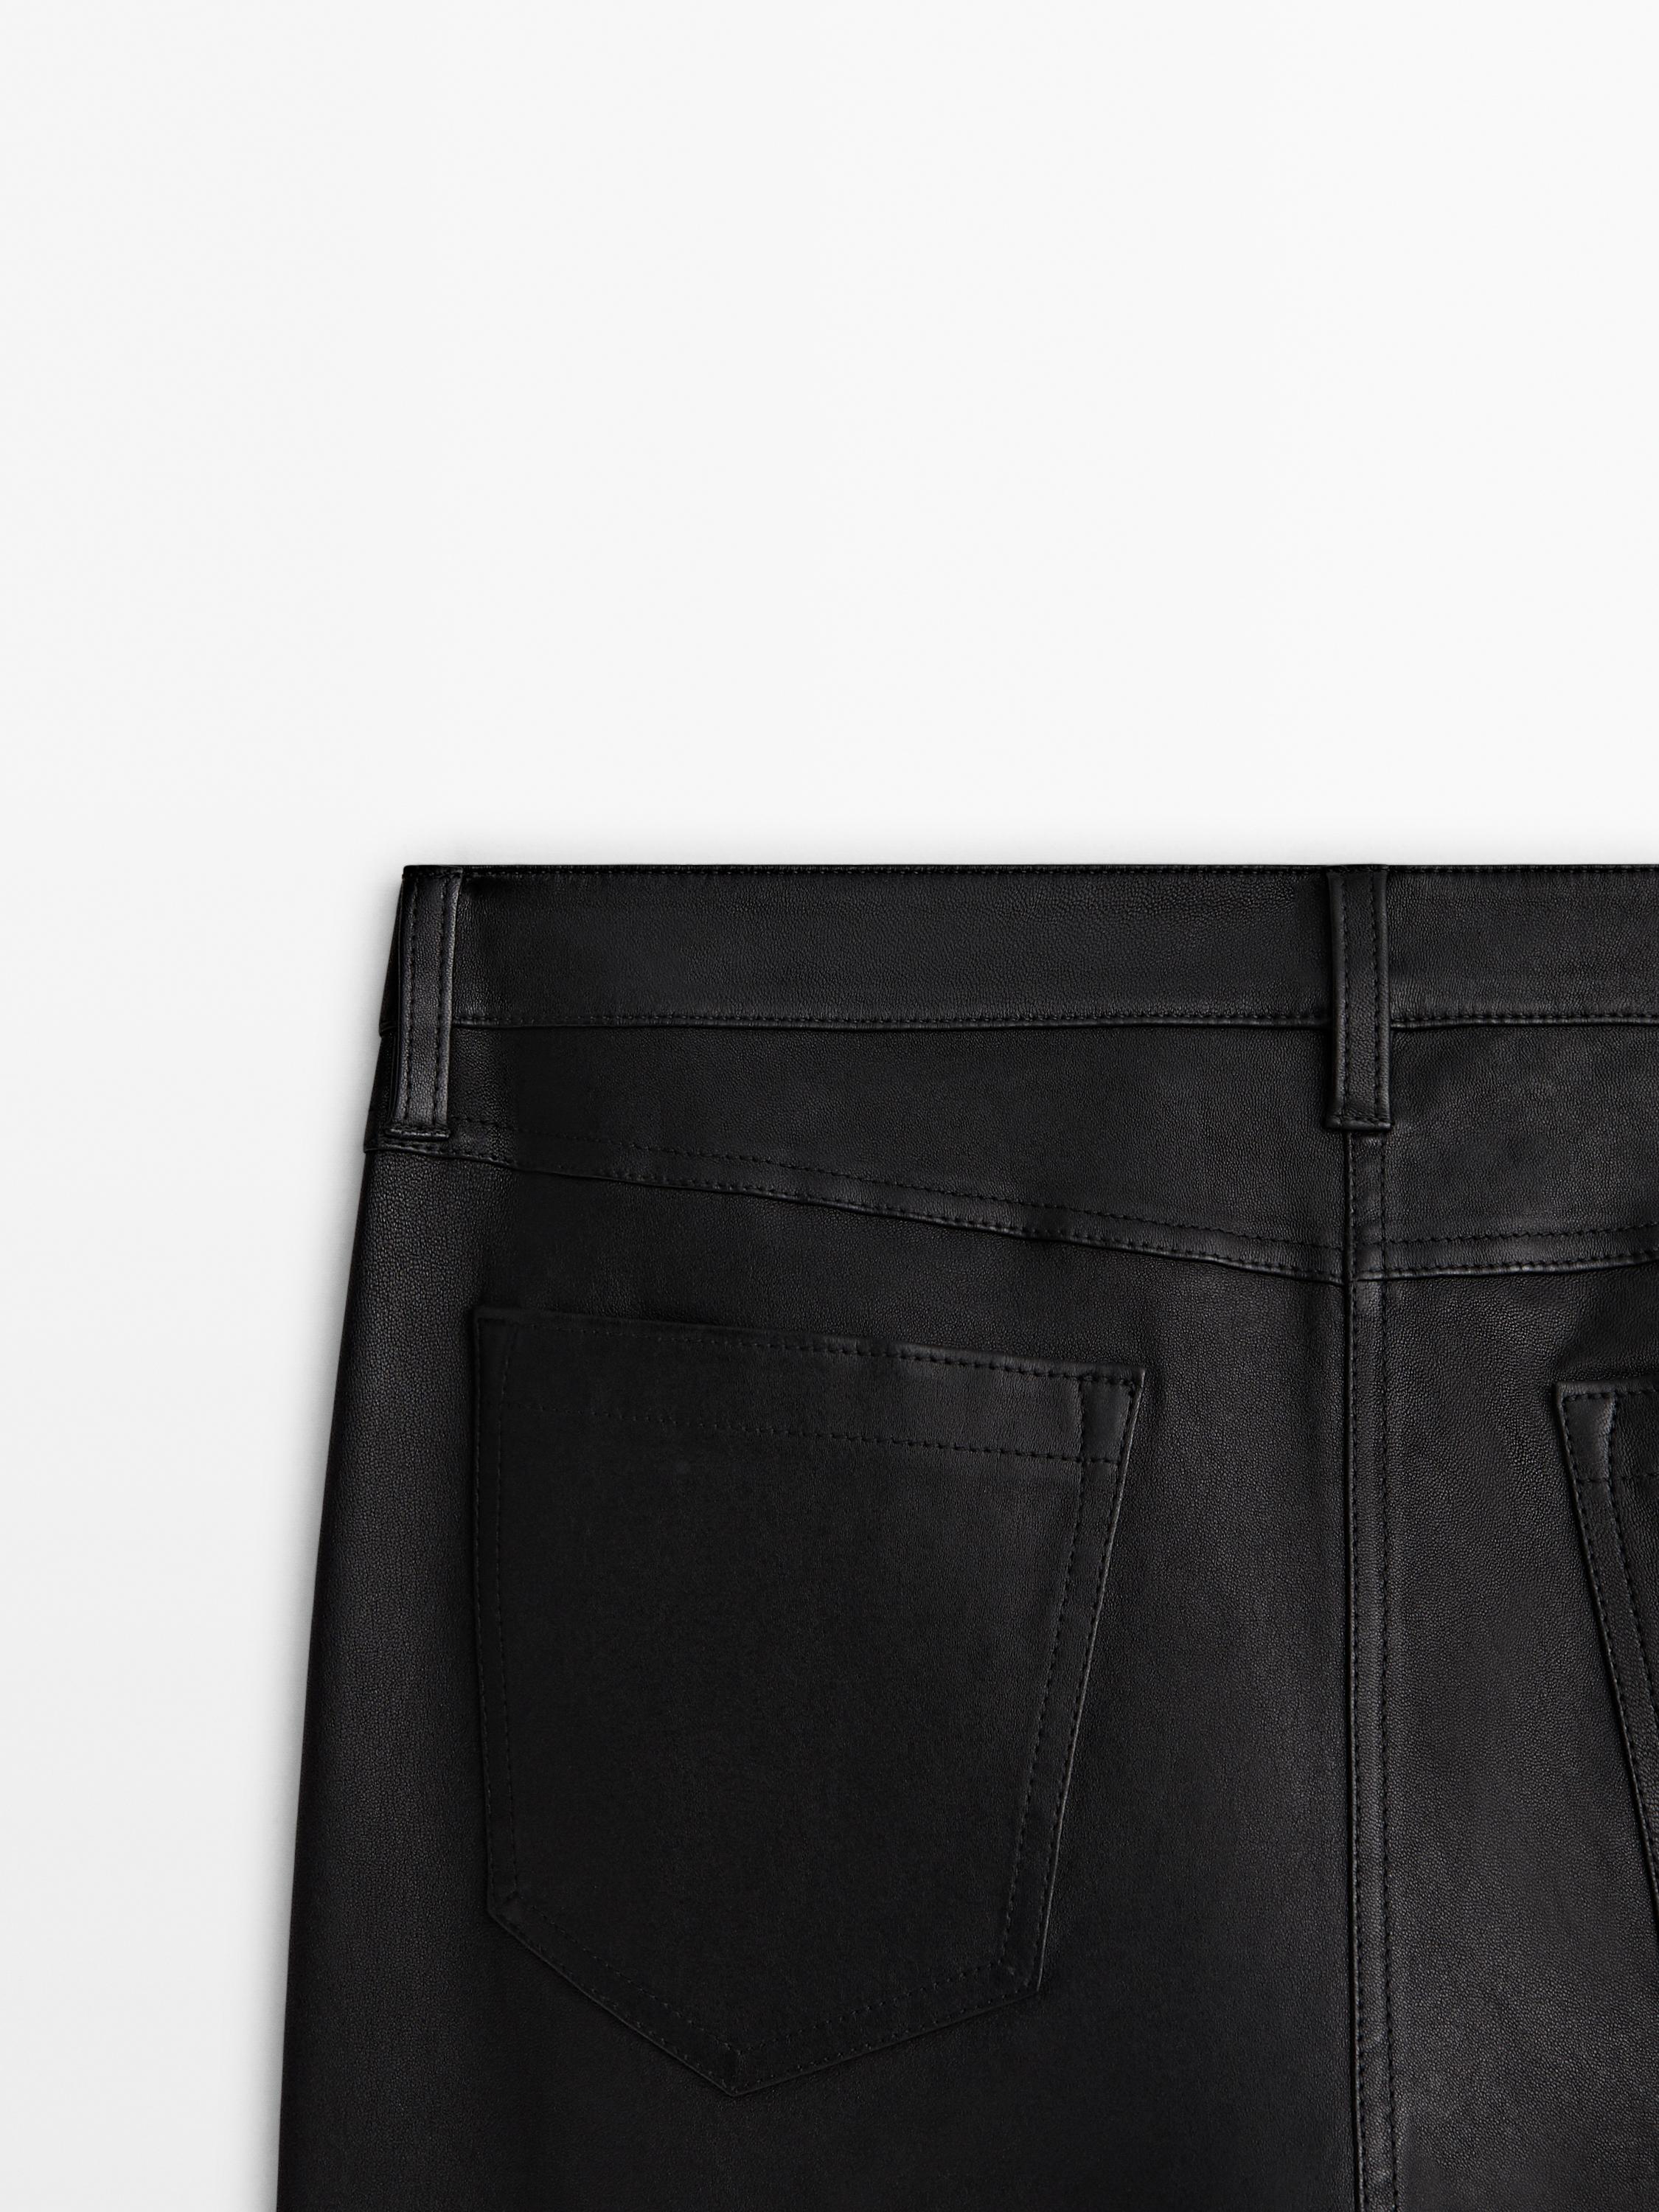 Black nappa leather leggings - Black